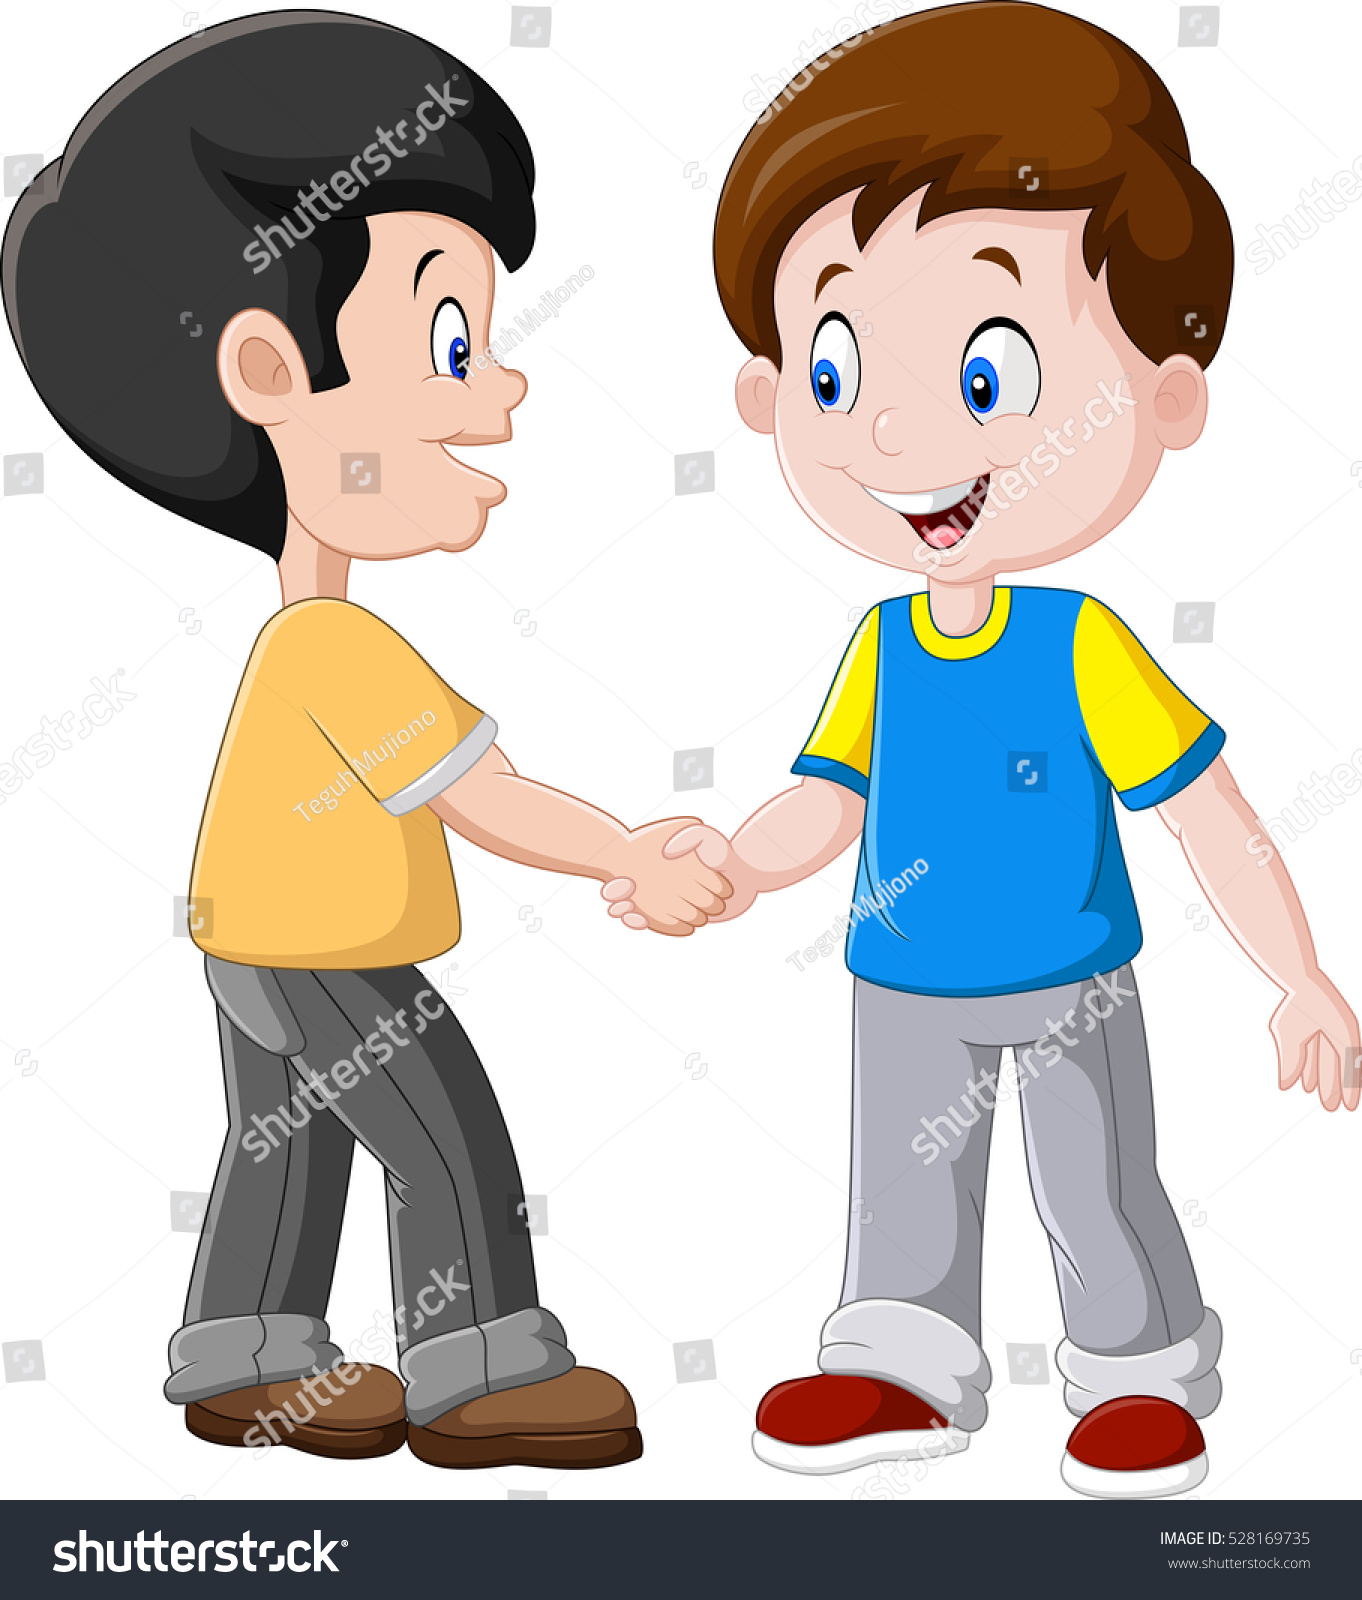 Two kids shaking hands Images, Stock Photos & Vectors | Shutterstock